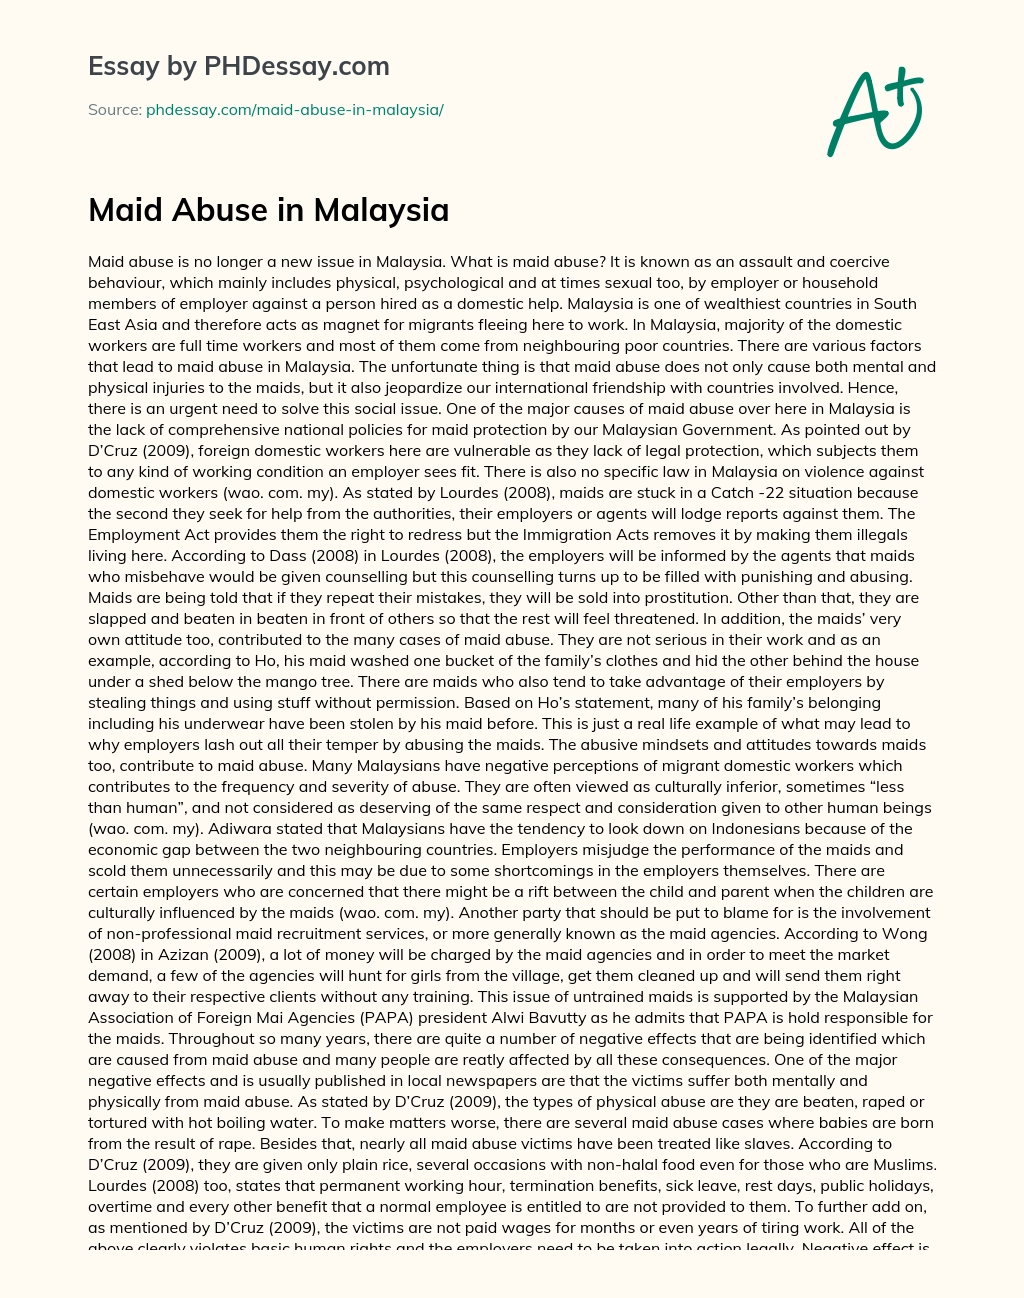 Maid Abuse in Malaysia essay